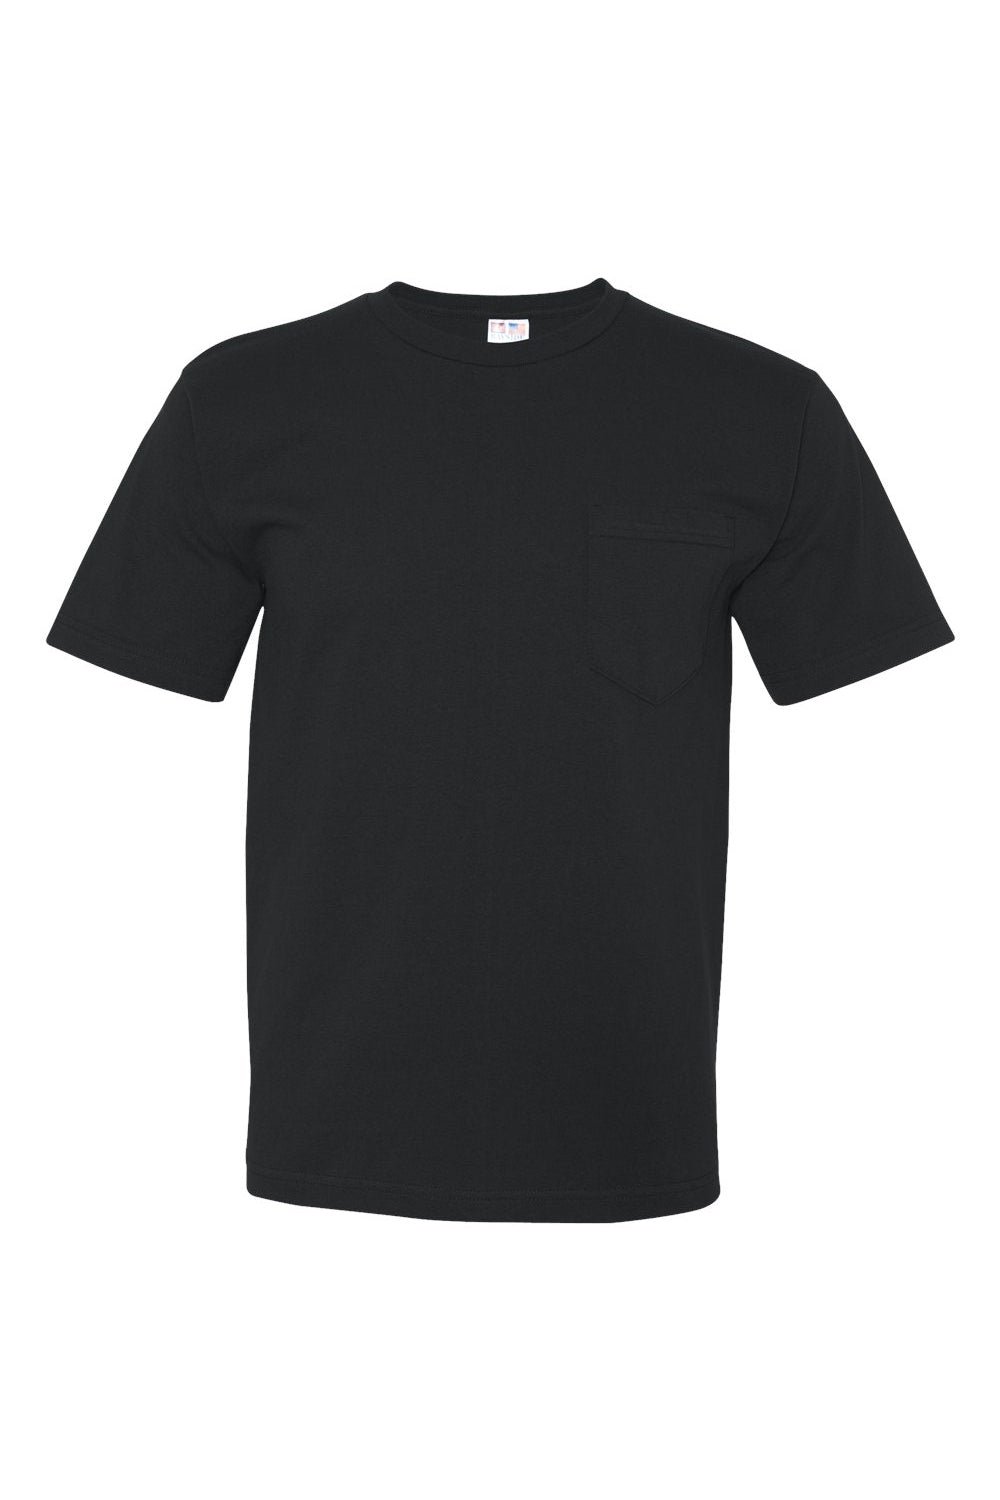 Bayside BA5070 Mens USA Made Short Sleeve Crewneck T-Shirt w/ Pocket Black Flat Front